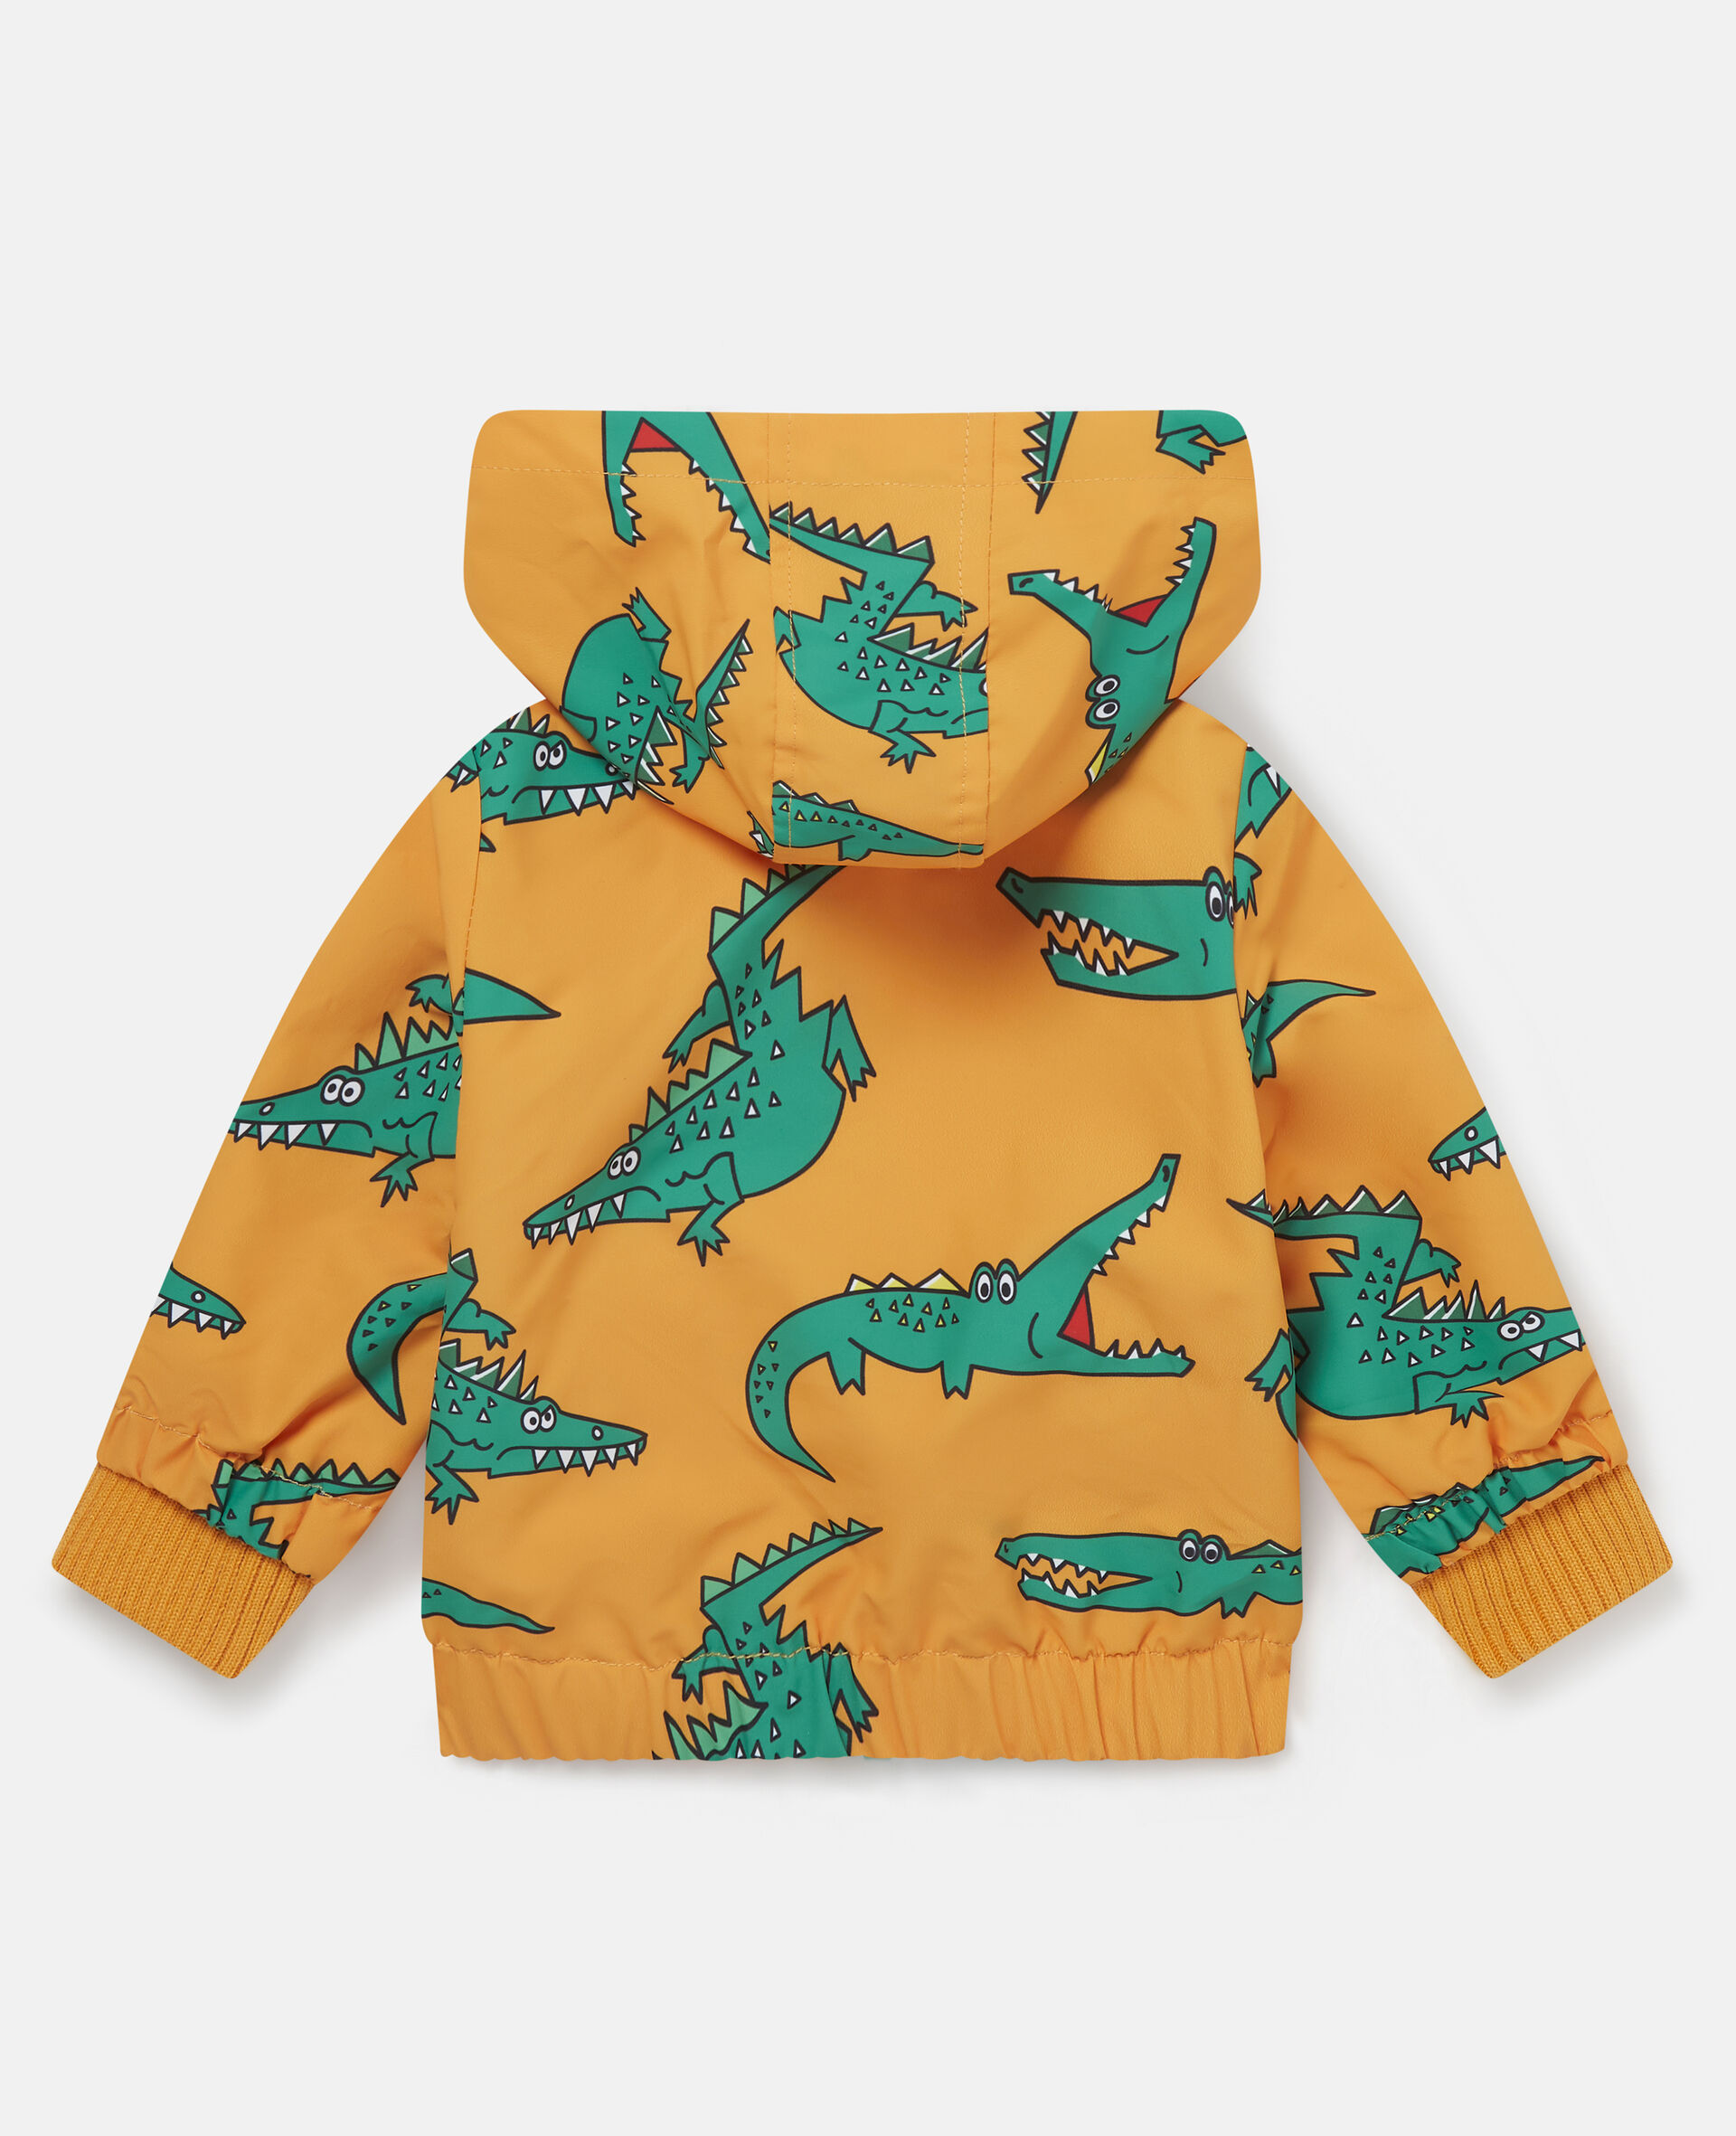 Crocodile Print All Over Jacket -Orange-large image number 2